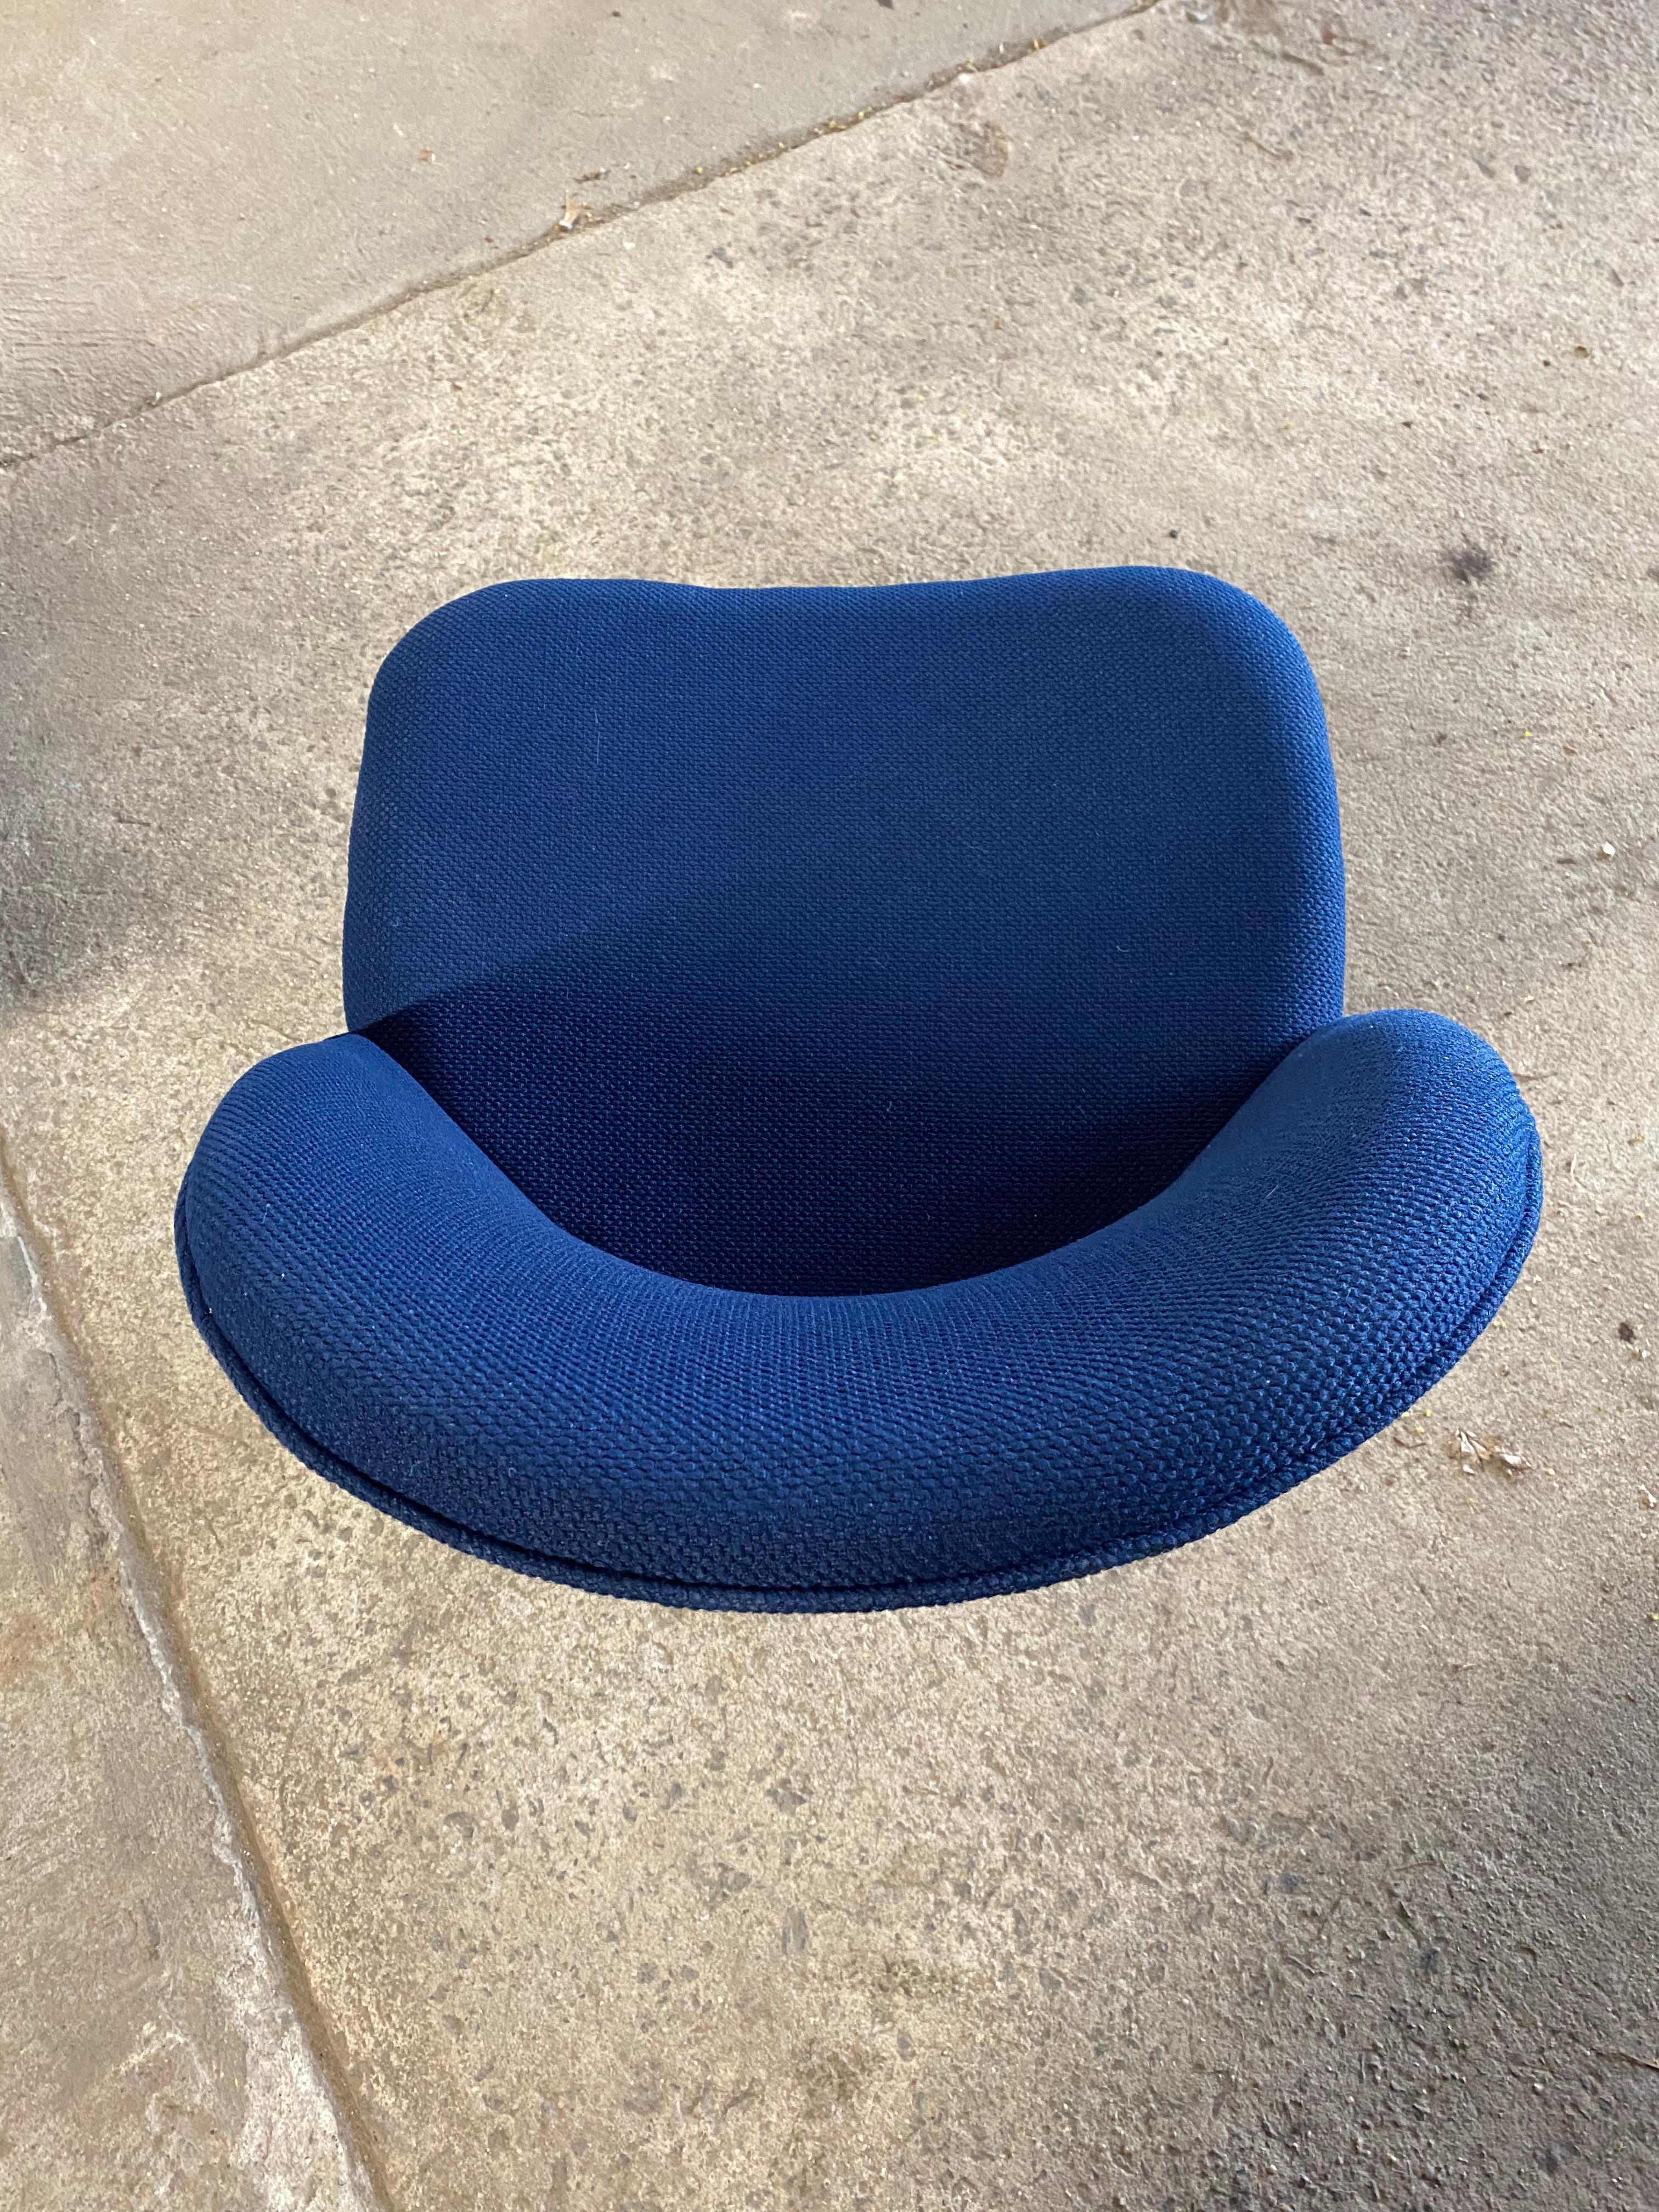 Saarinen Style Crescent Base Swivel Chairs 5